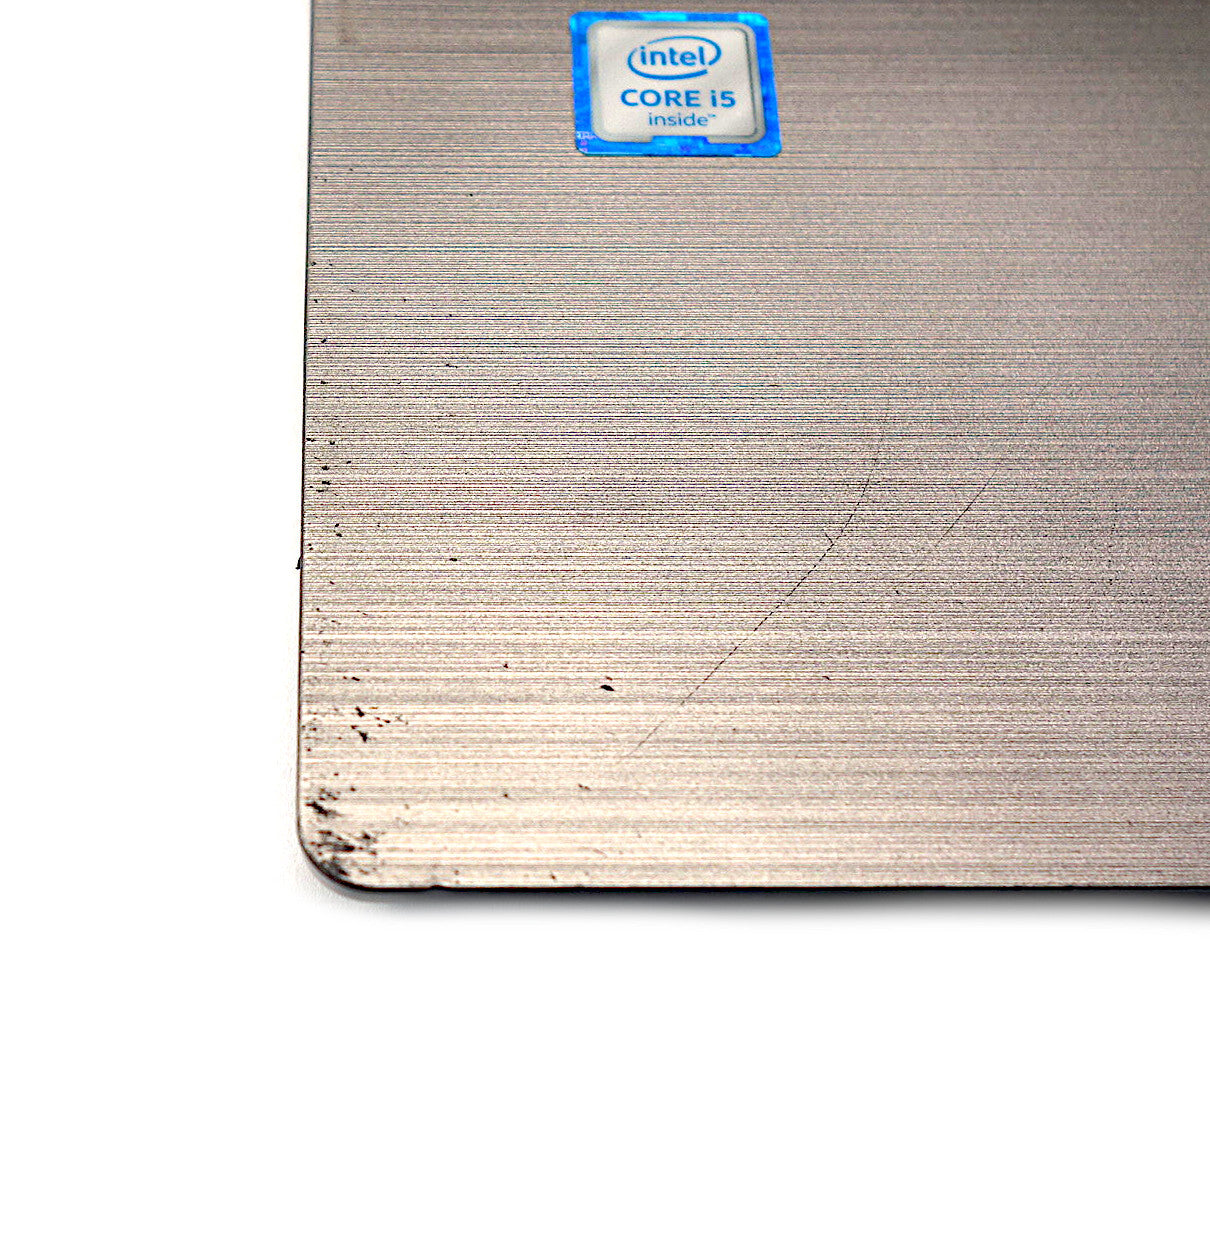 Toshiba Tecra A40-C Laptop, 13.9" i5 6th Gen, 8GB RAM, 256GB SSD